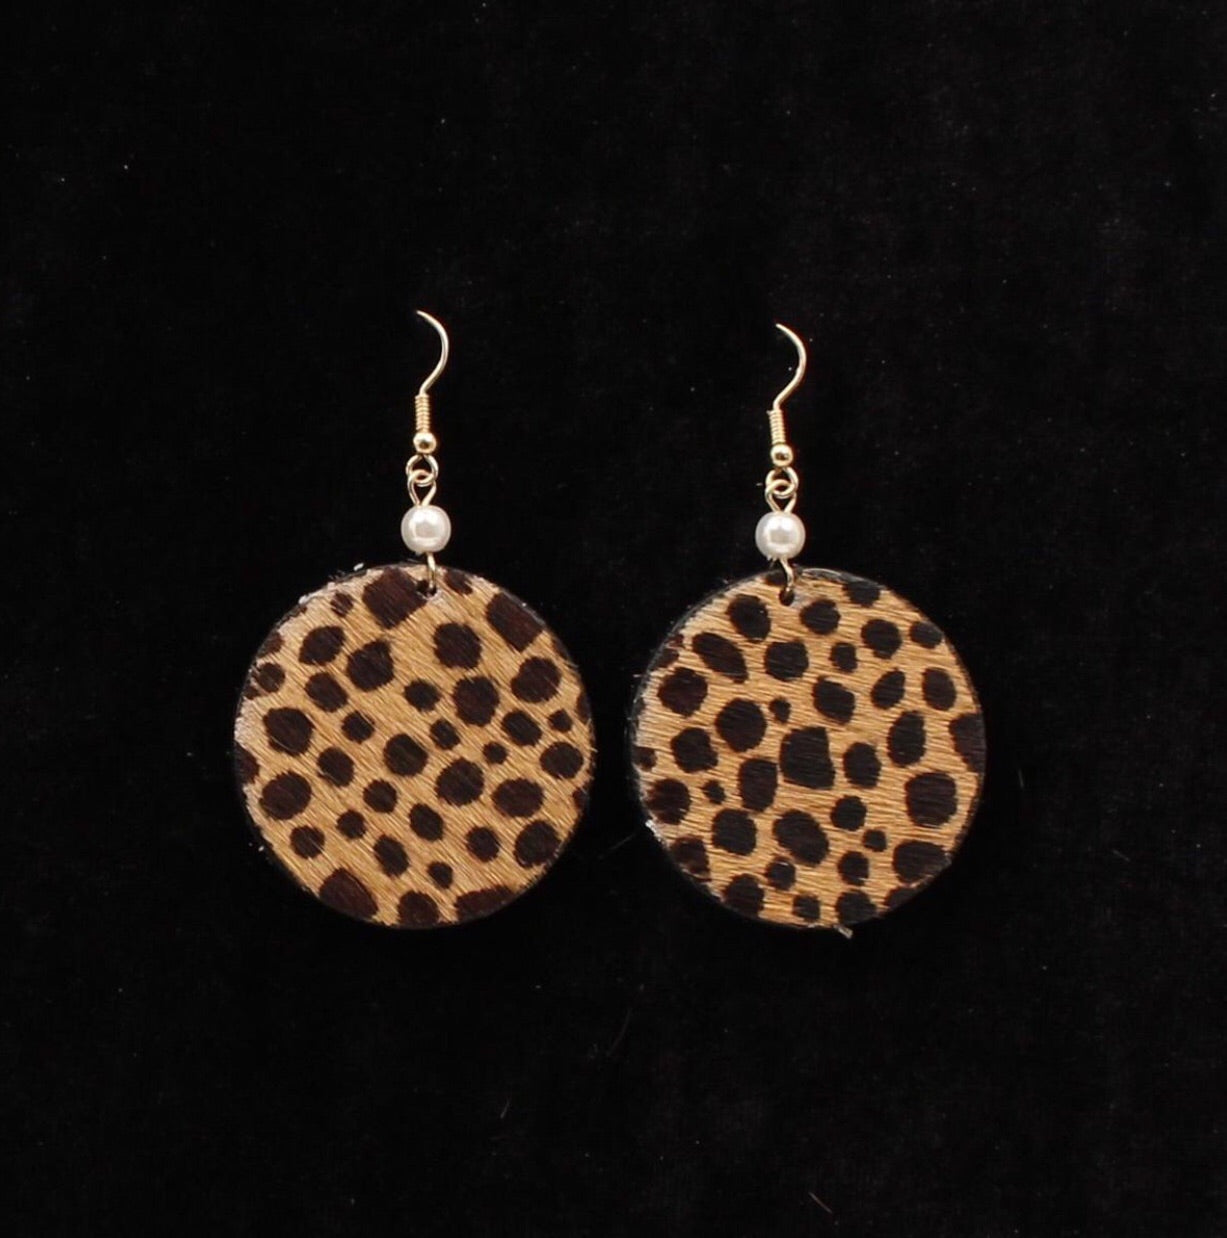 Jewelry earrings cheetah print leather 474